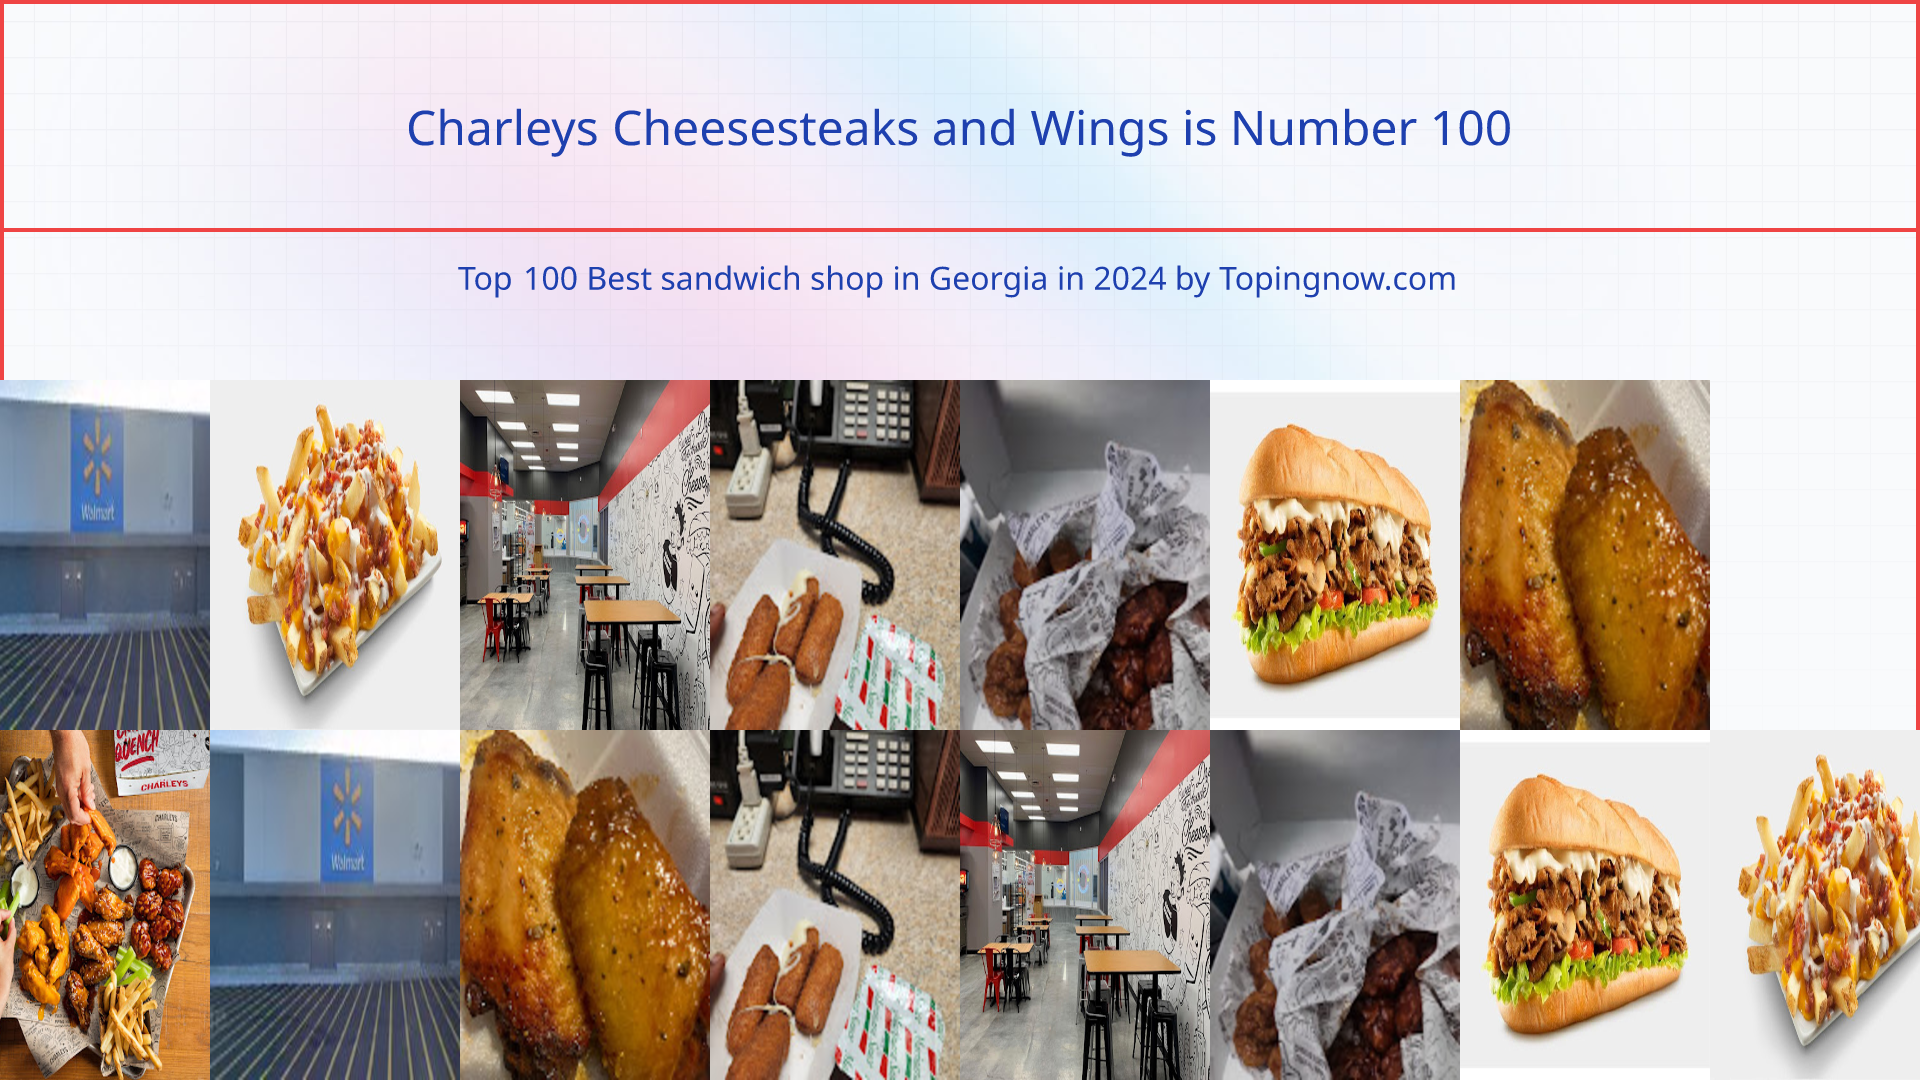 Charleys Cheesesteaks and Wings: Top 100 Best sandwich shop in Georgia in 2024